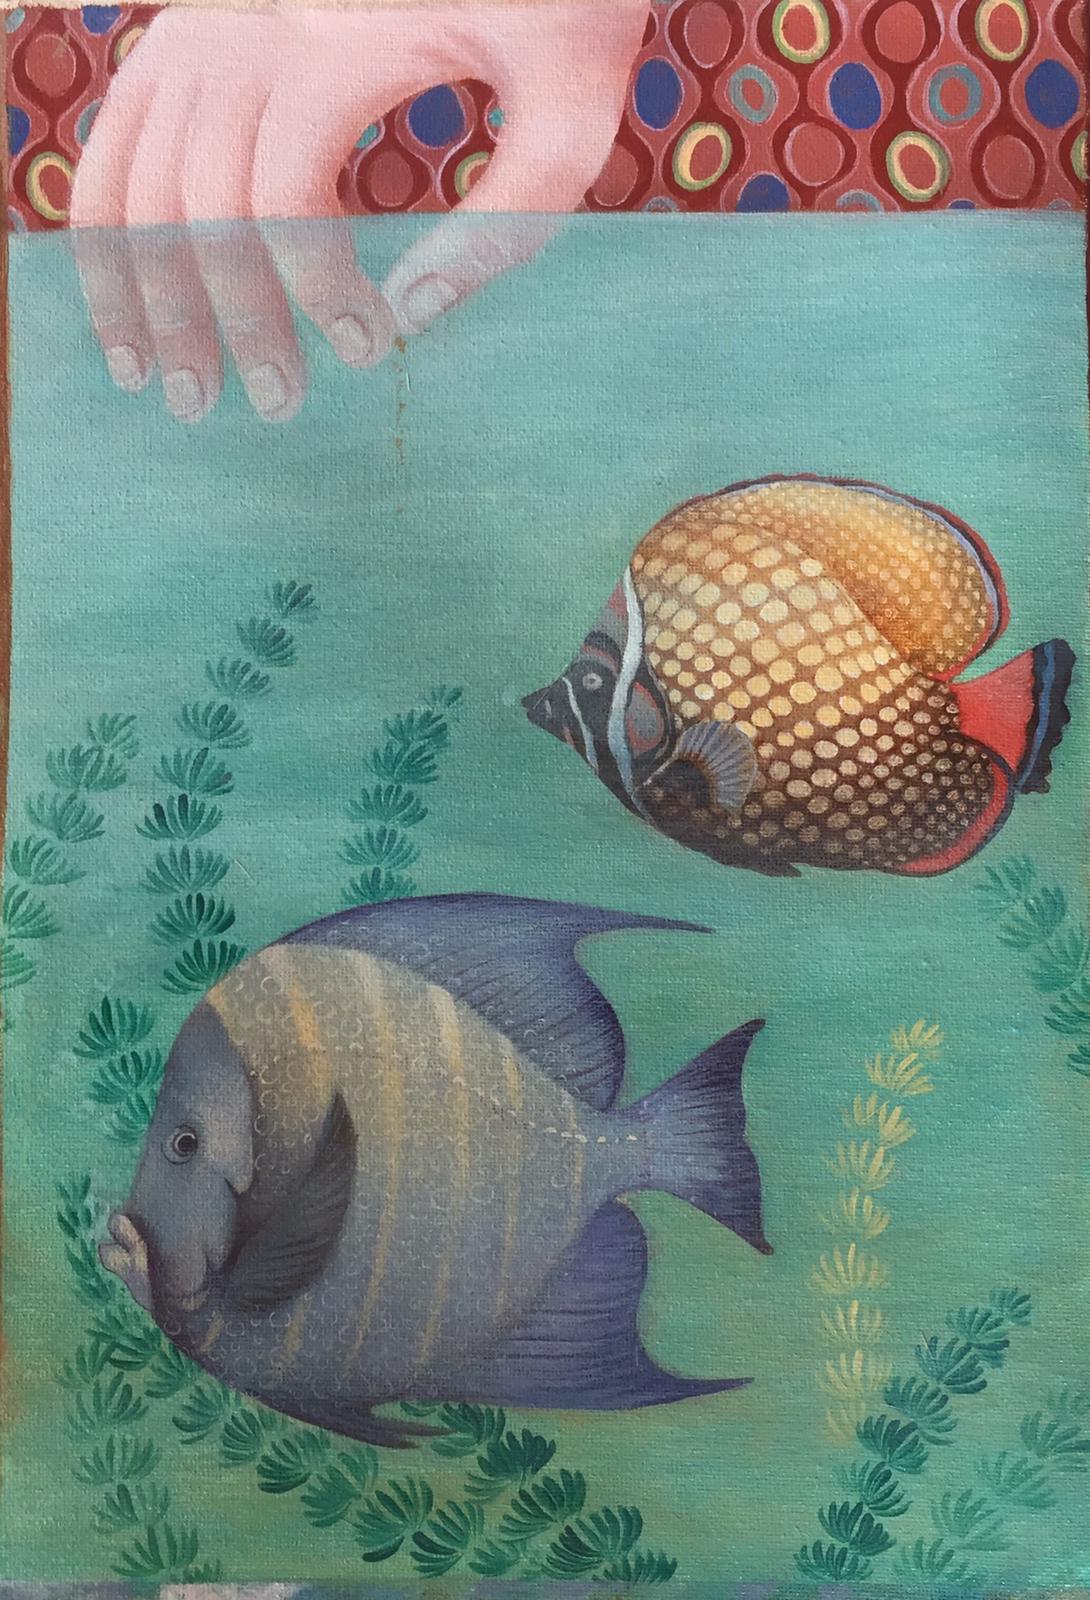 Aquarium (Fishs) - naive art, made in red, green, blue, yellow colors